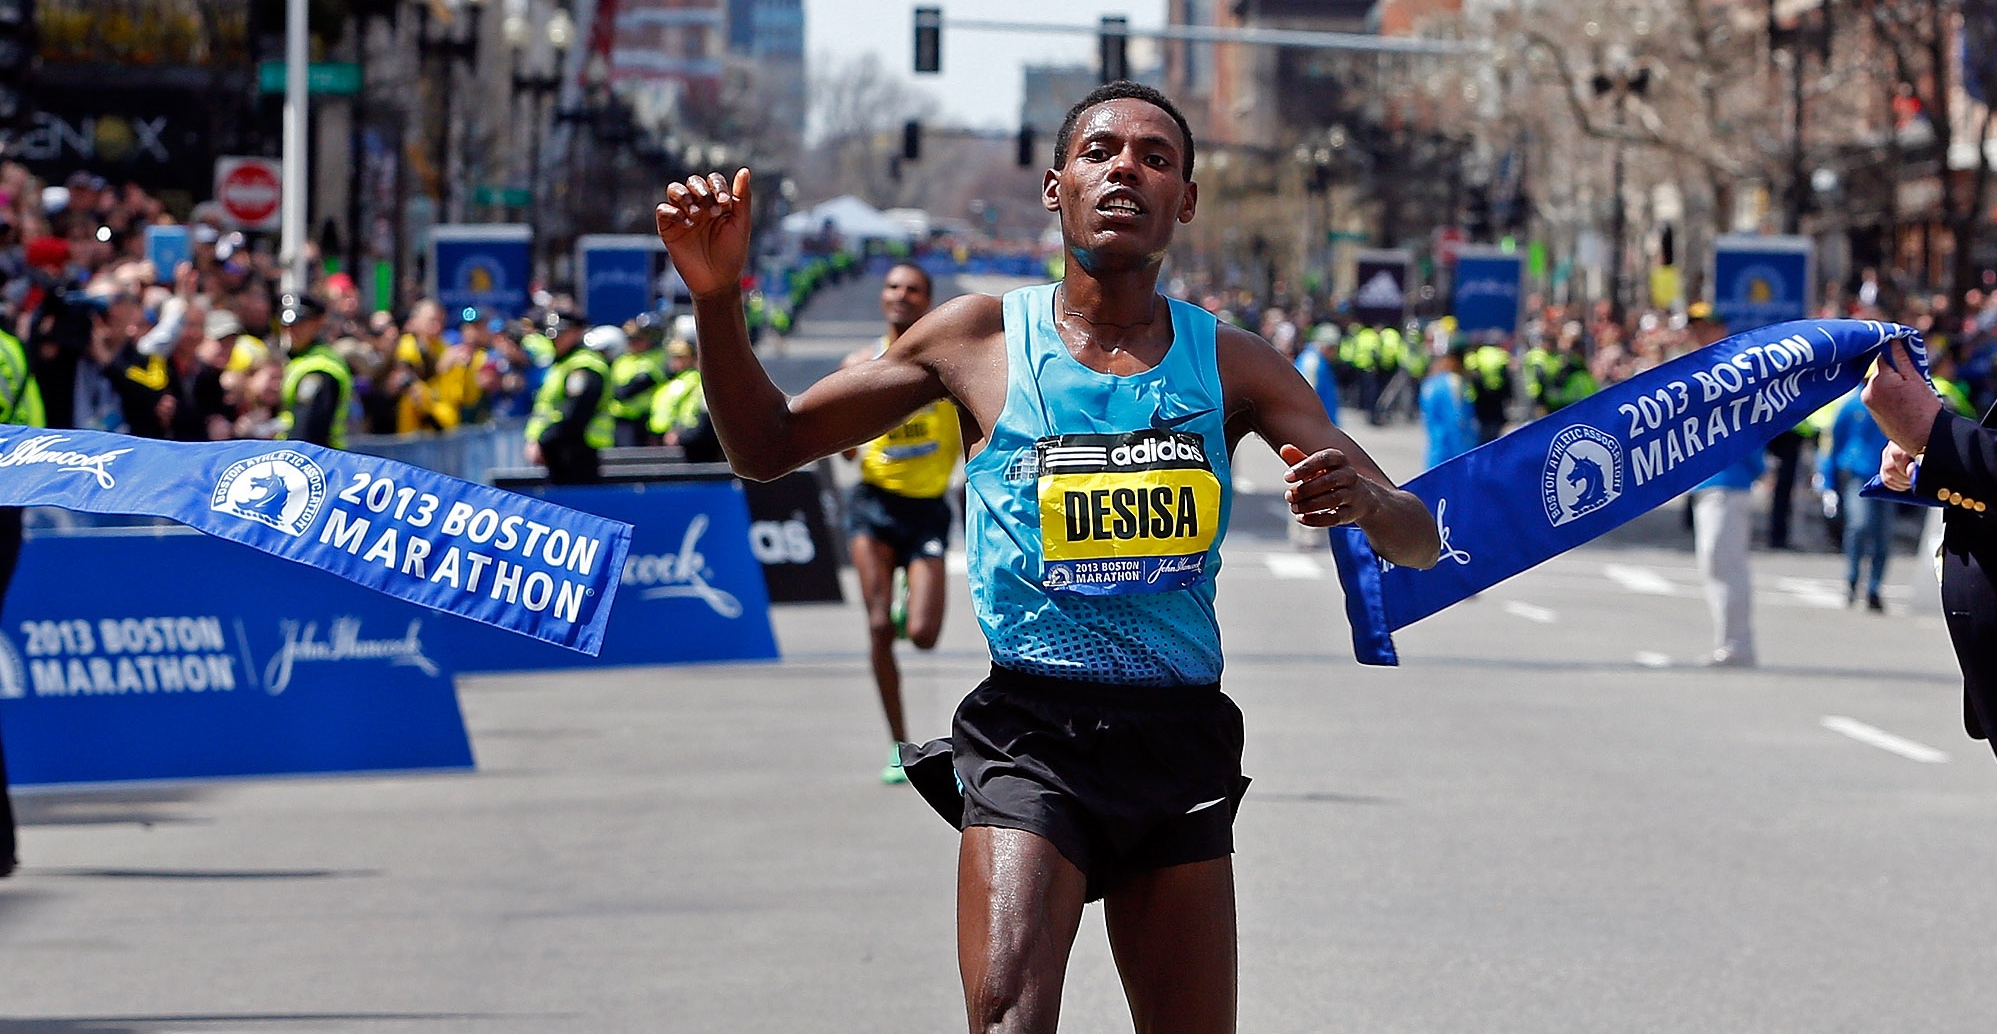 A man running in the boston marathon